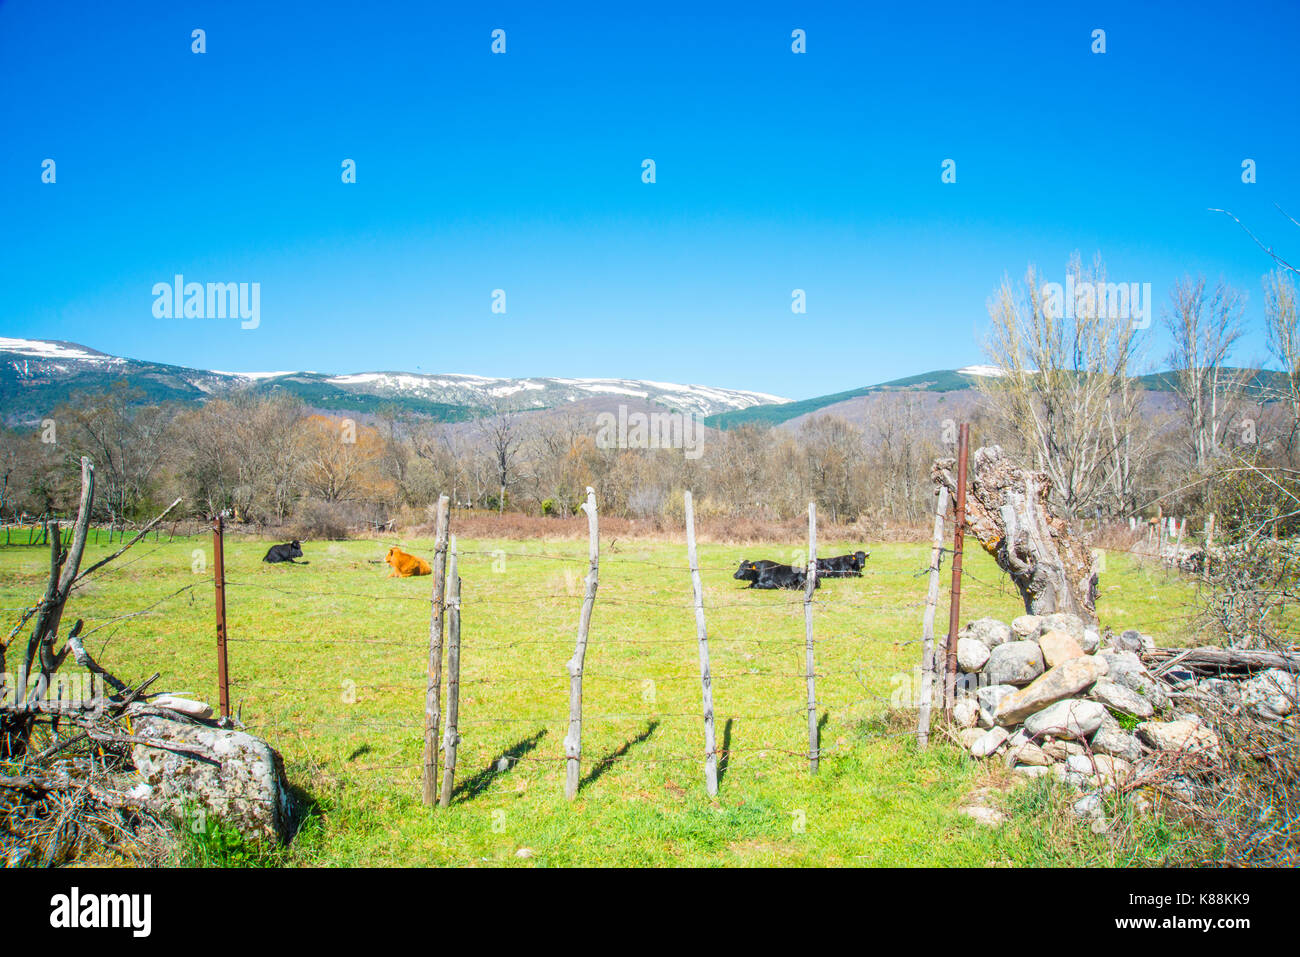 Cows in a meadow. Sierra de Guadarrama National Park, Rascafria, Madrid province, Spain. Stock Photo